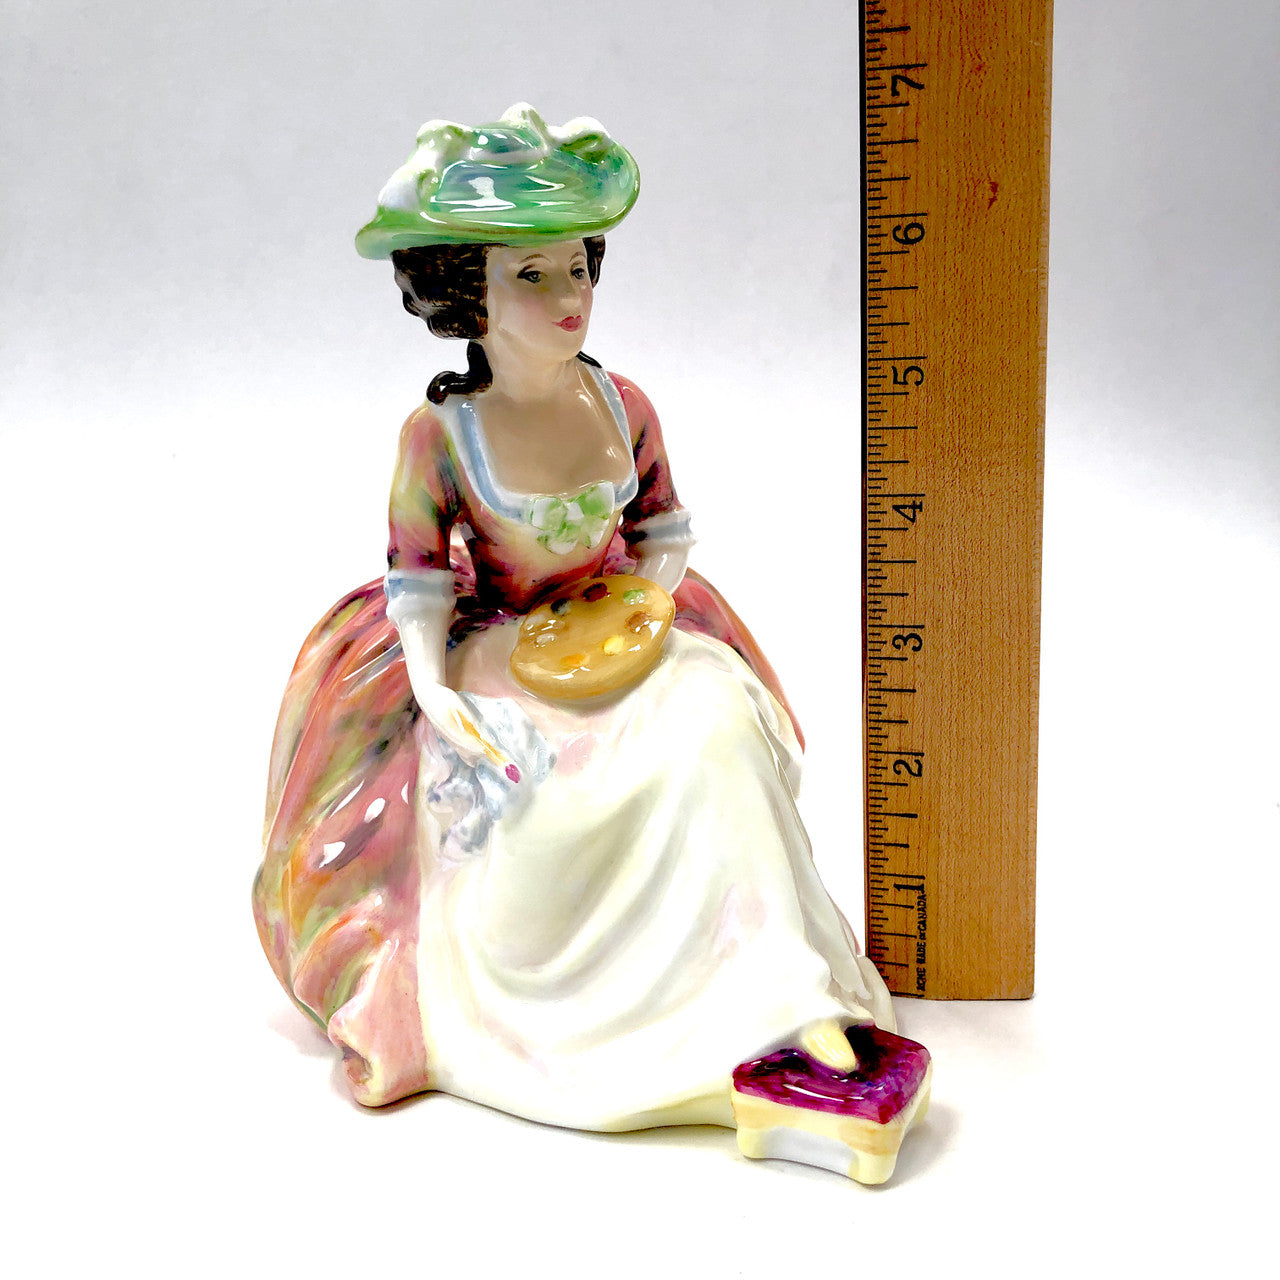 Royal Doulton, Kathleen, HN2933, Figurine, Vintage, England, Peach, White, Green, Hat, Painting, Palette, Brush, Lady